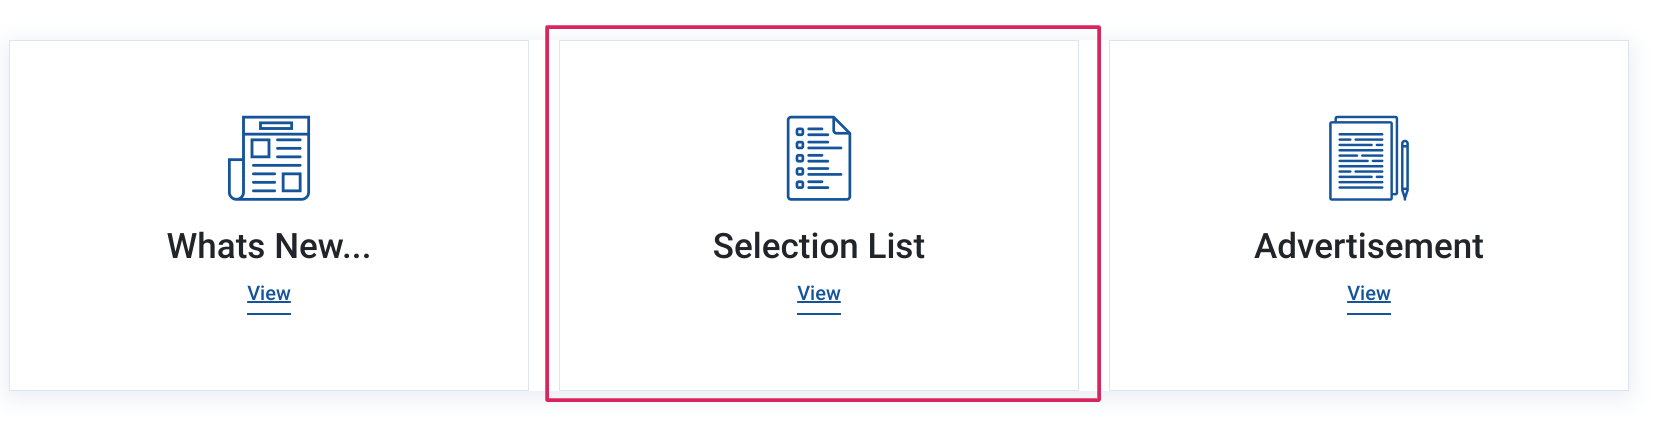 JKSSB Selection List Section